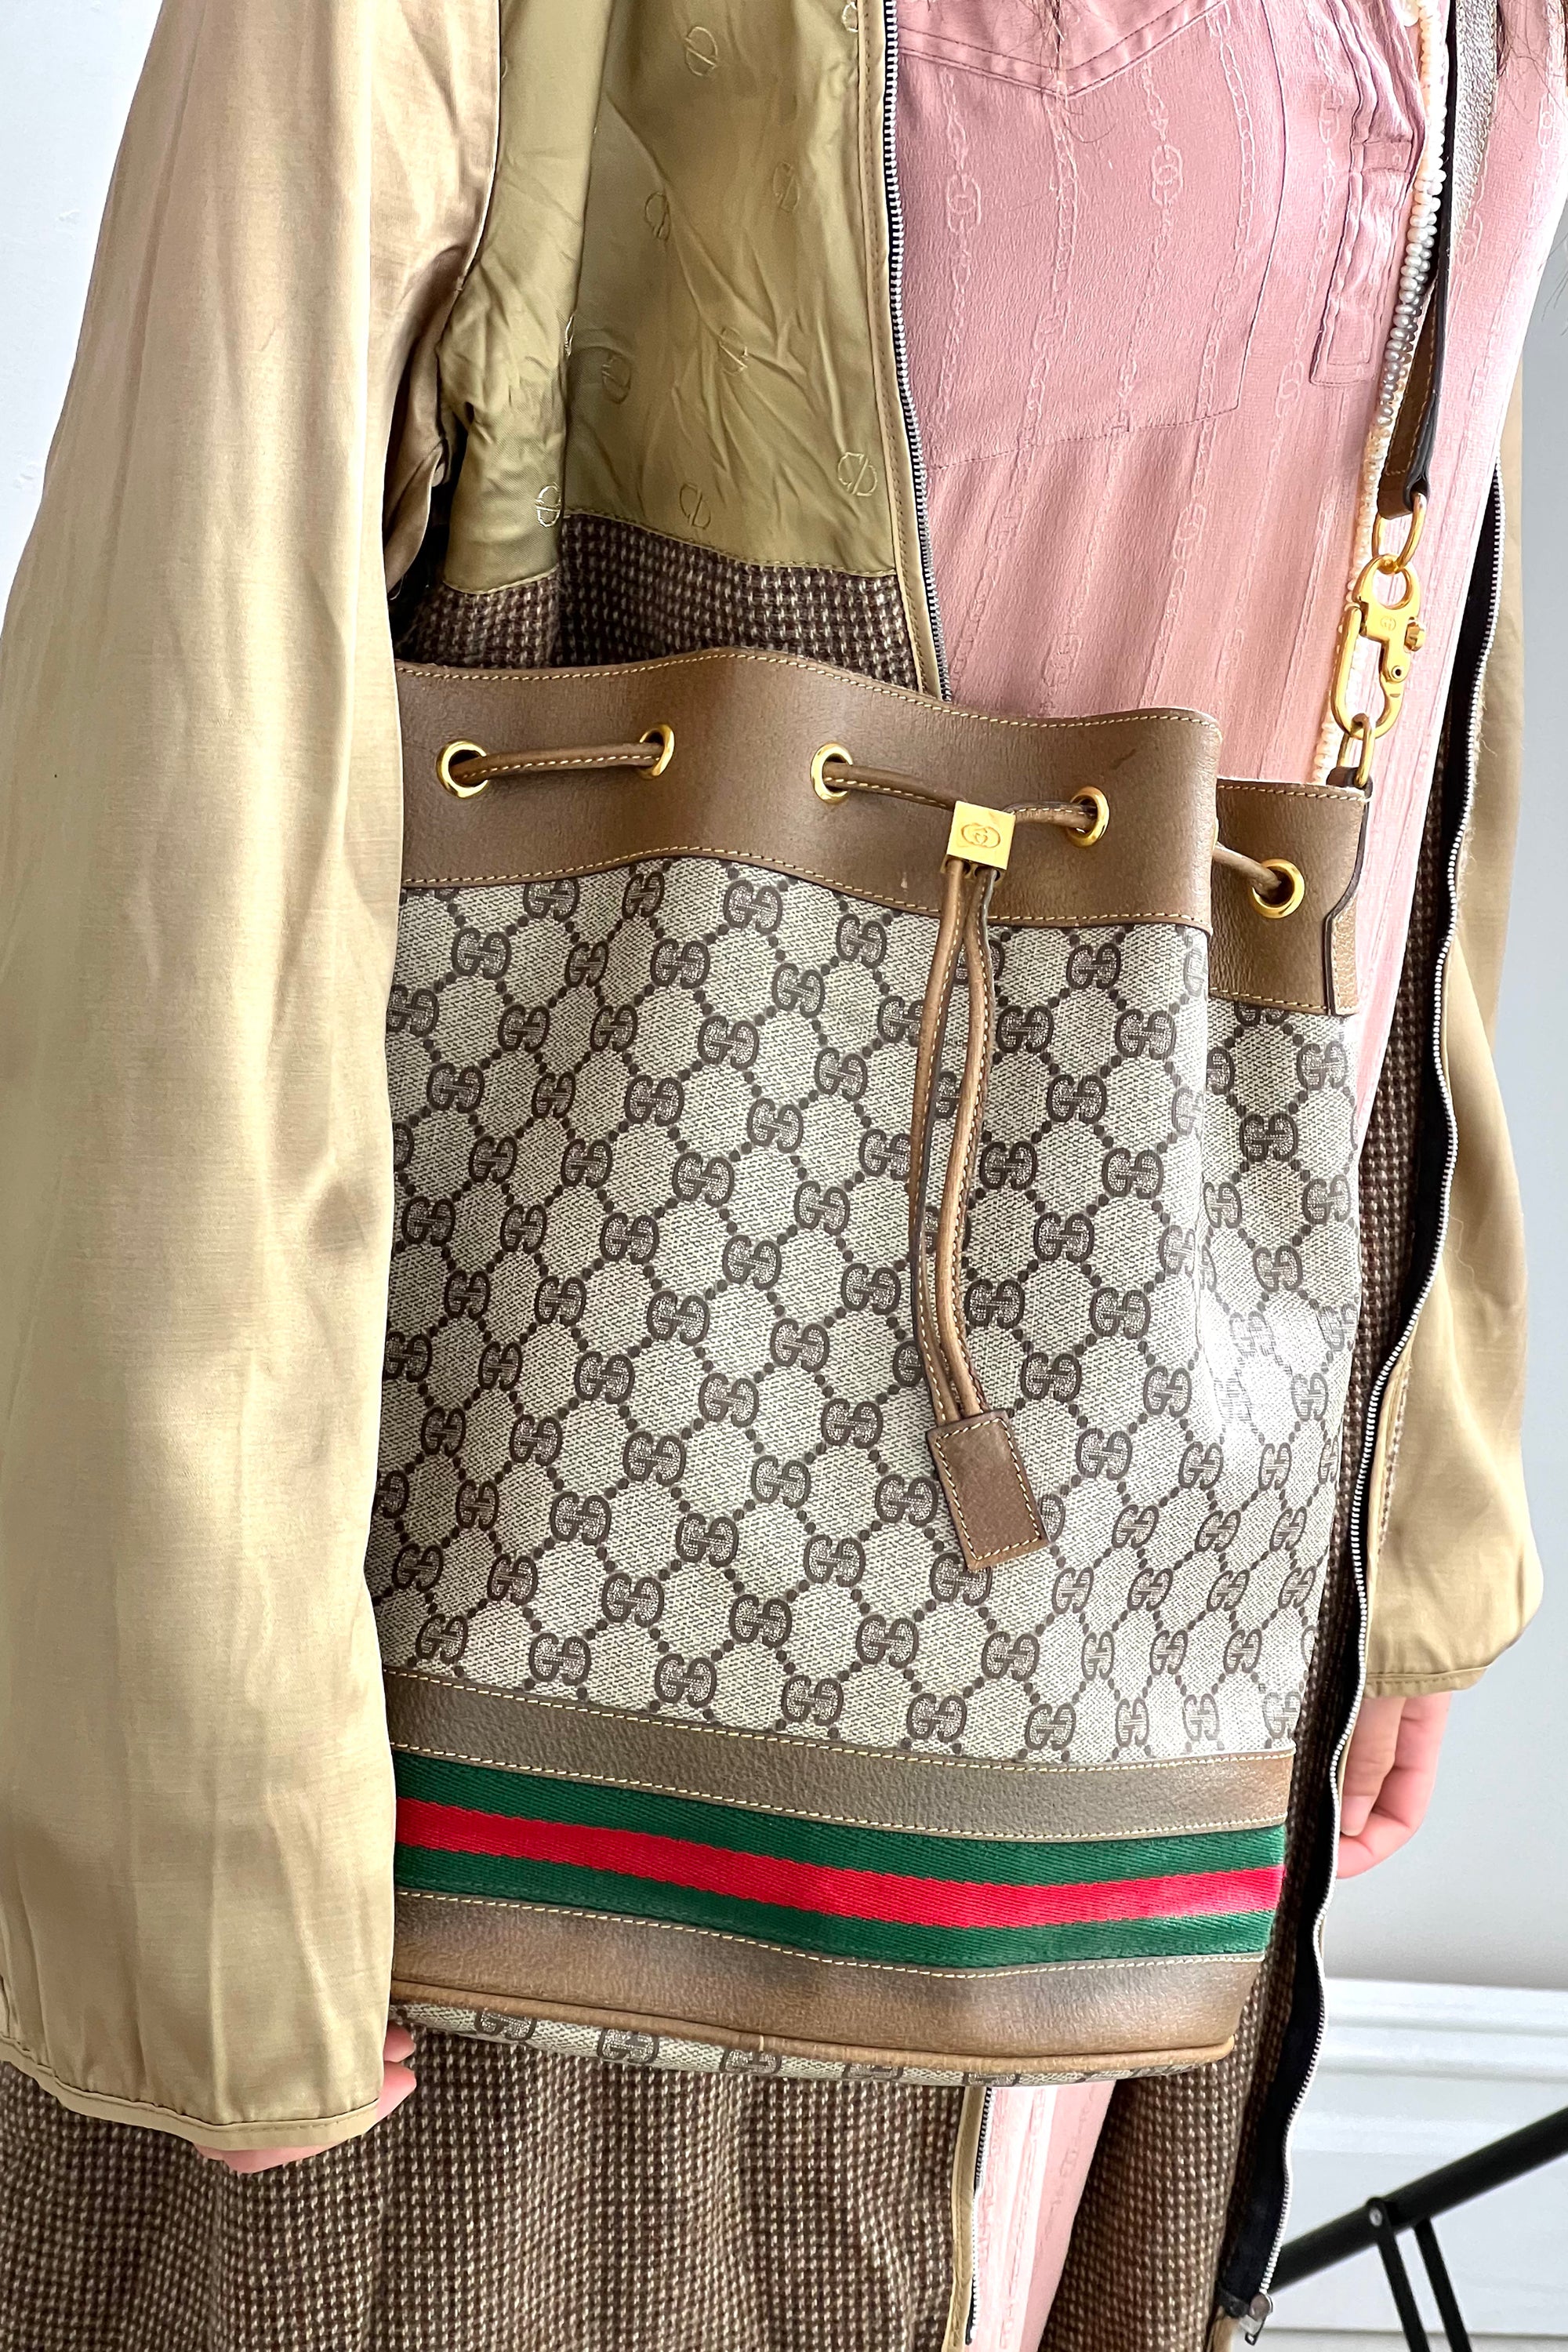 Vintage Gucci Bucket Bag Selected by Anna Corinna